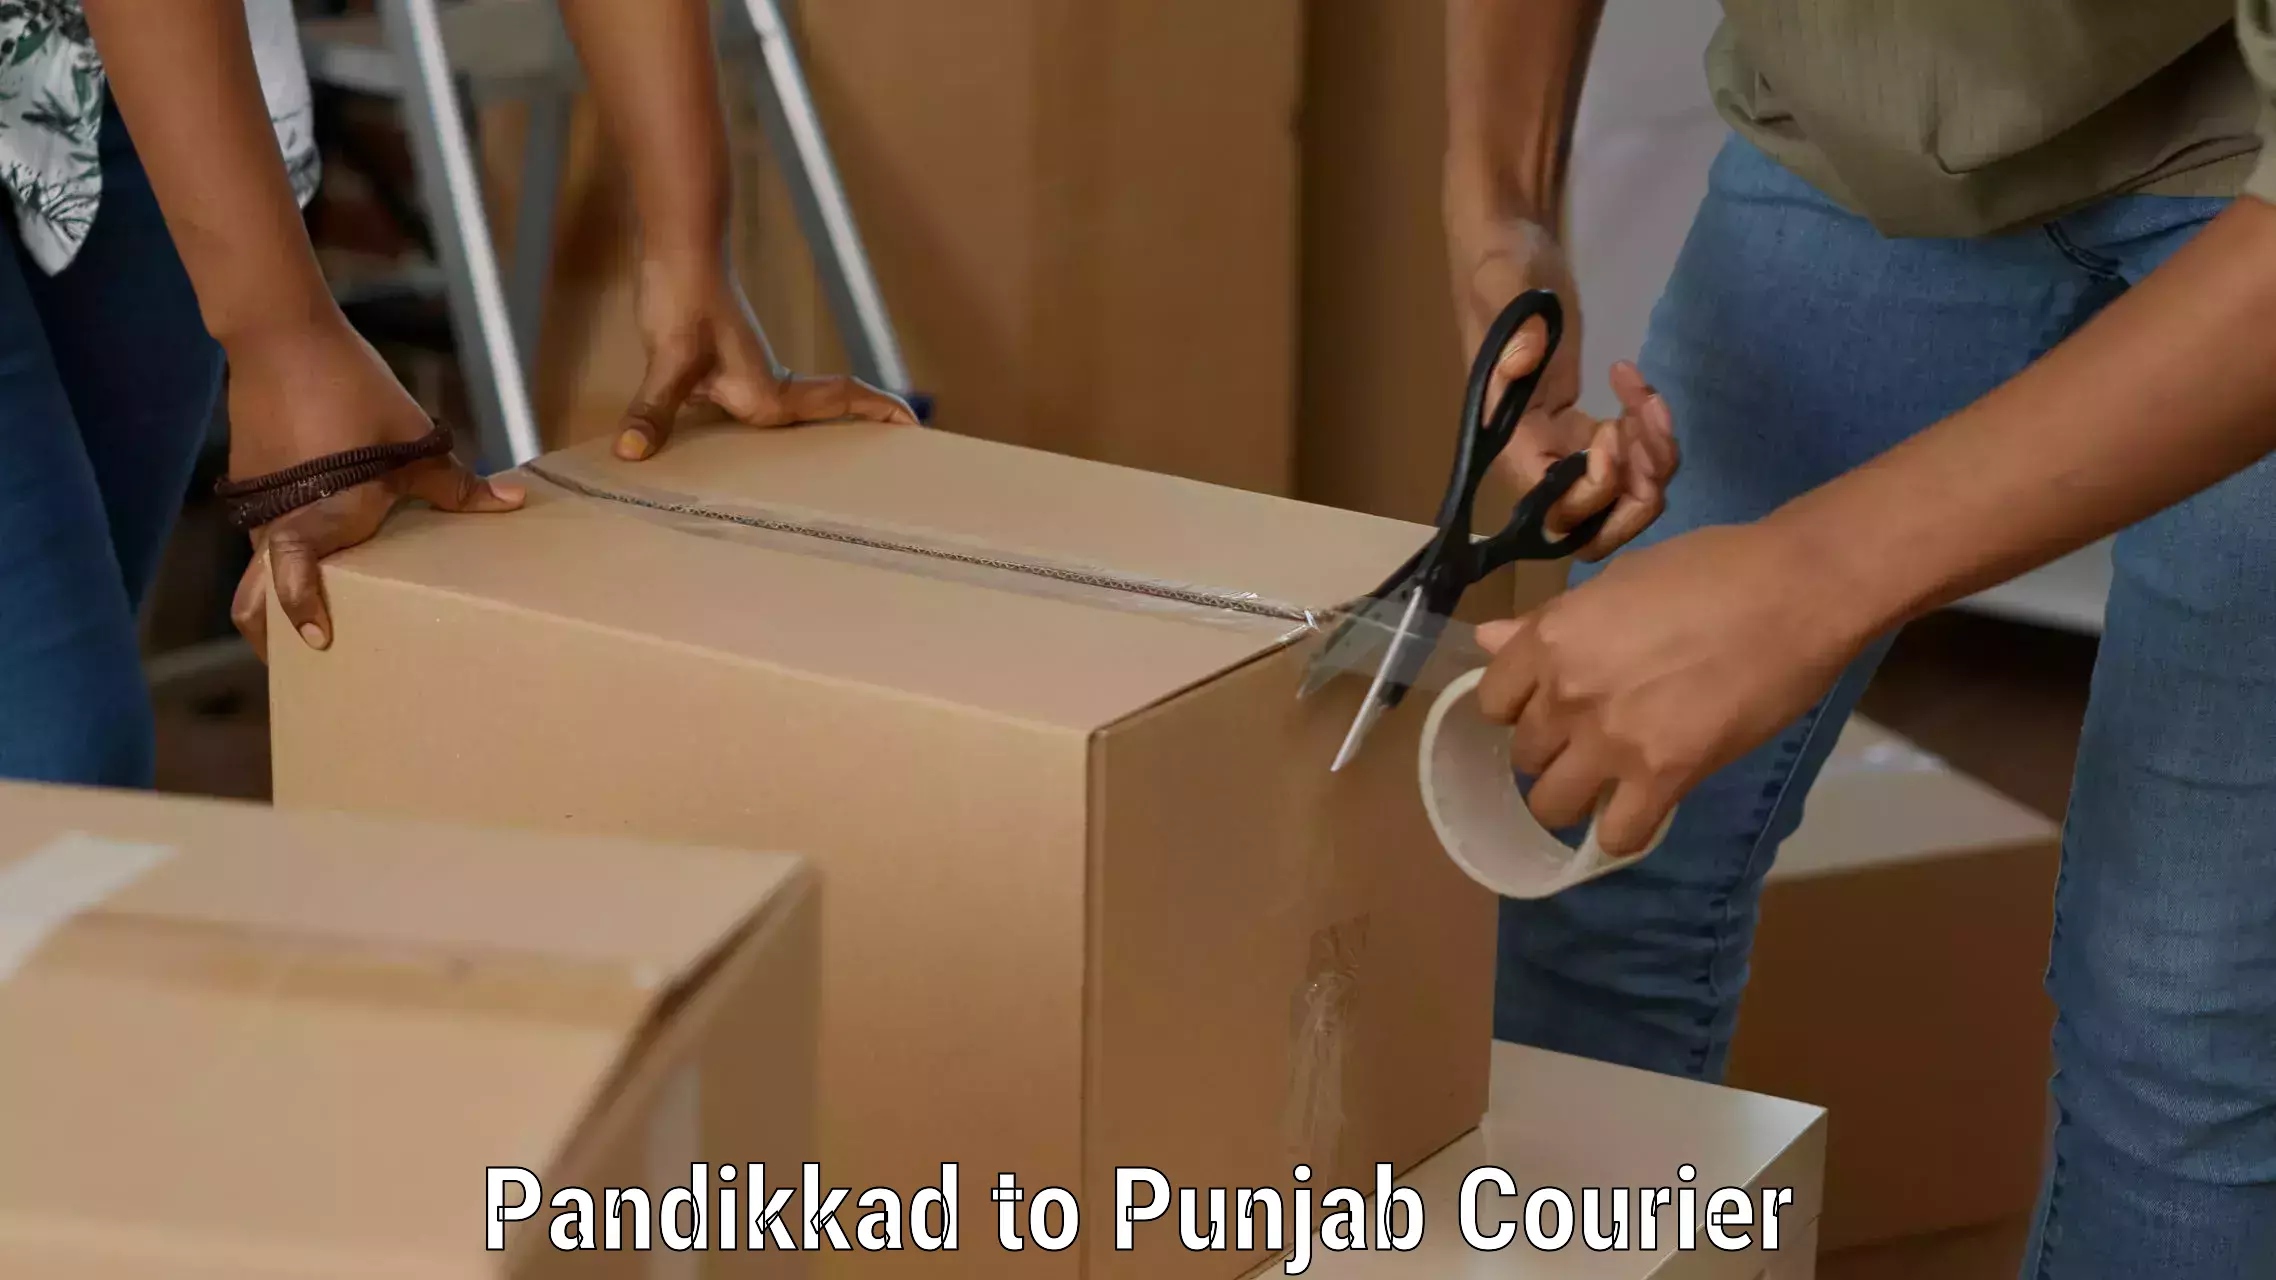 Supply chain efficiency Pandikkad to Punjab